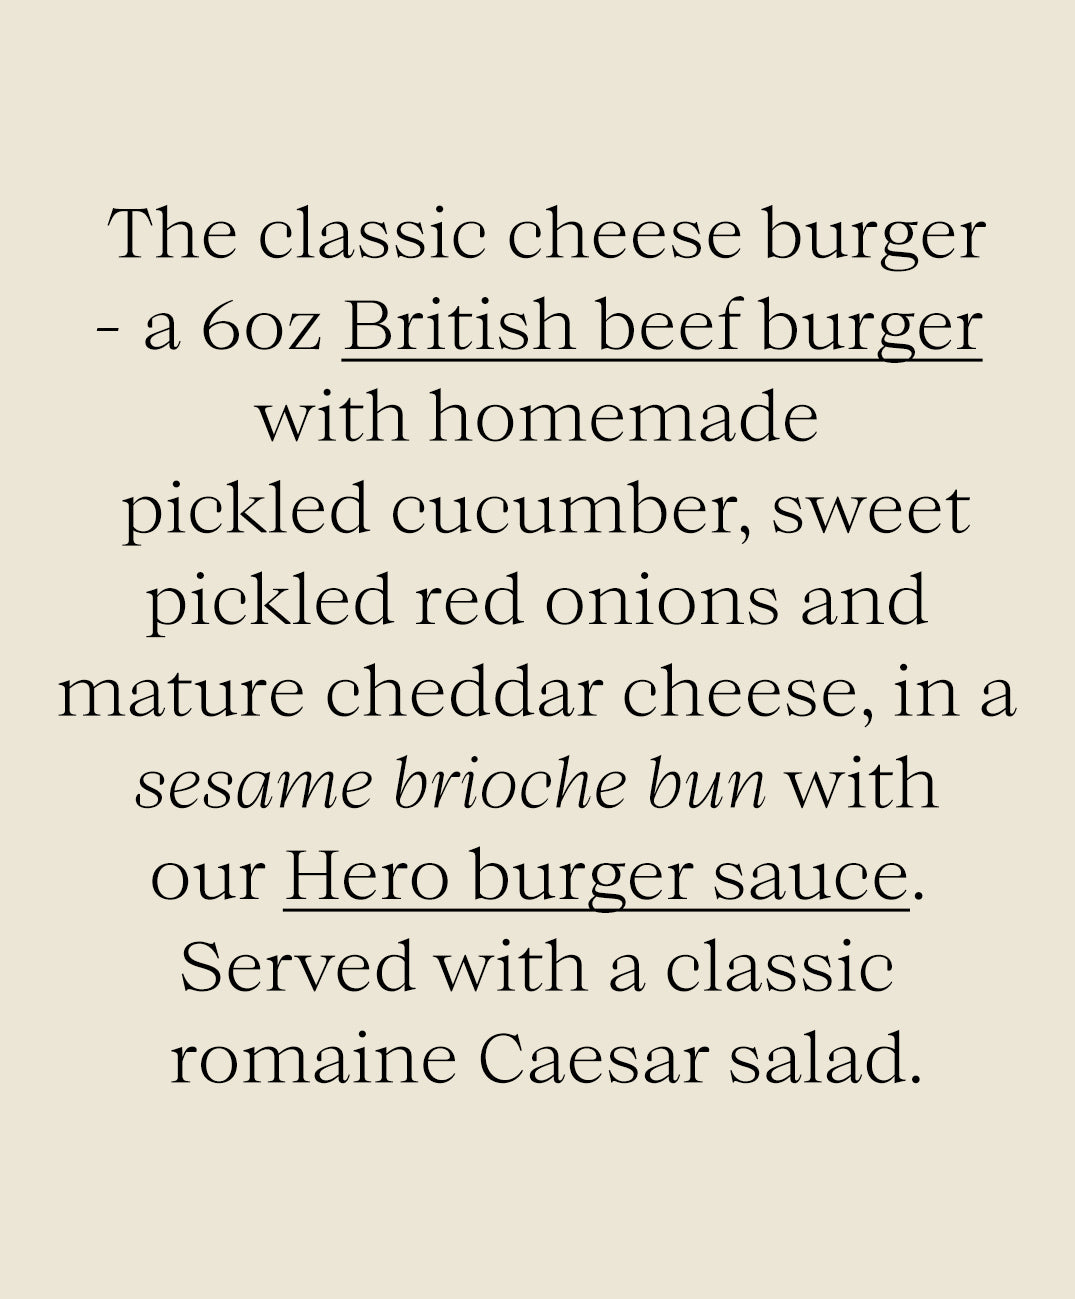 The Hero Burger with Homemade Caesar Salad